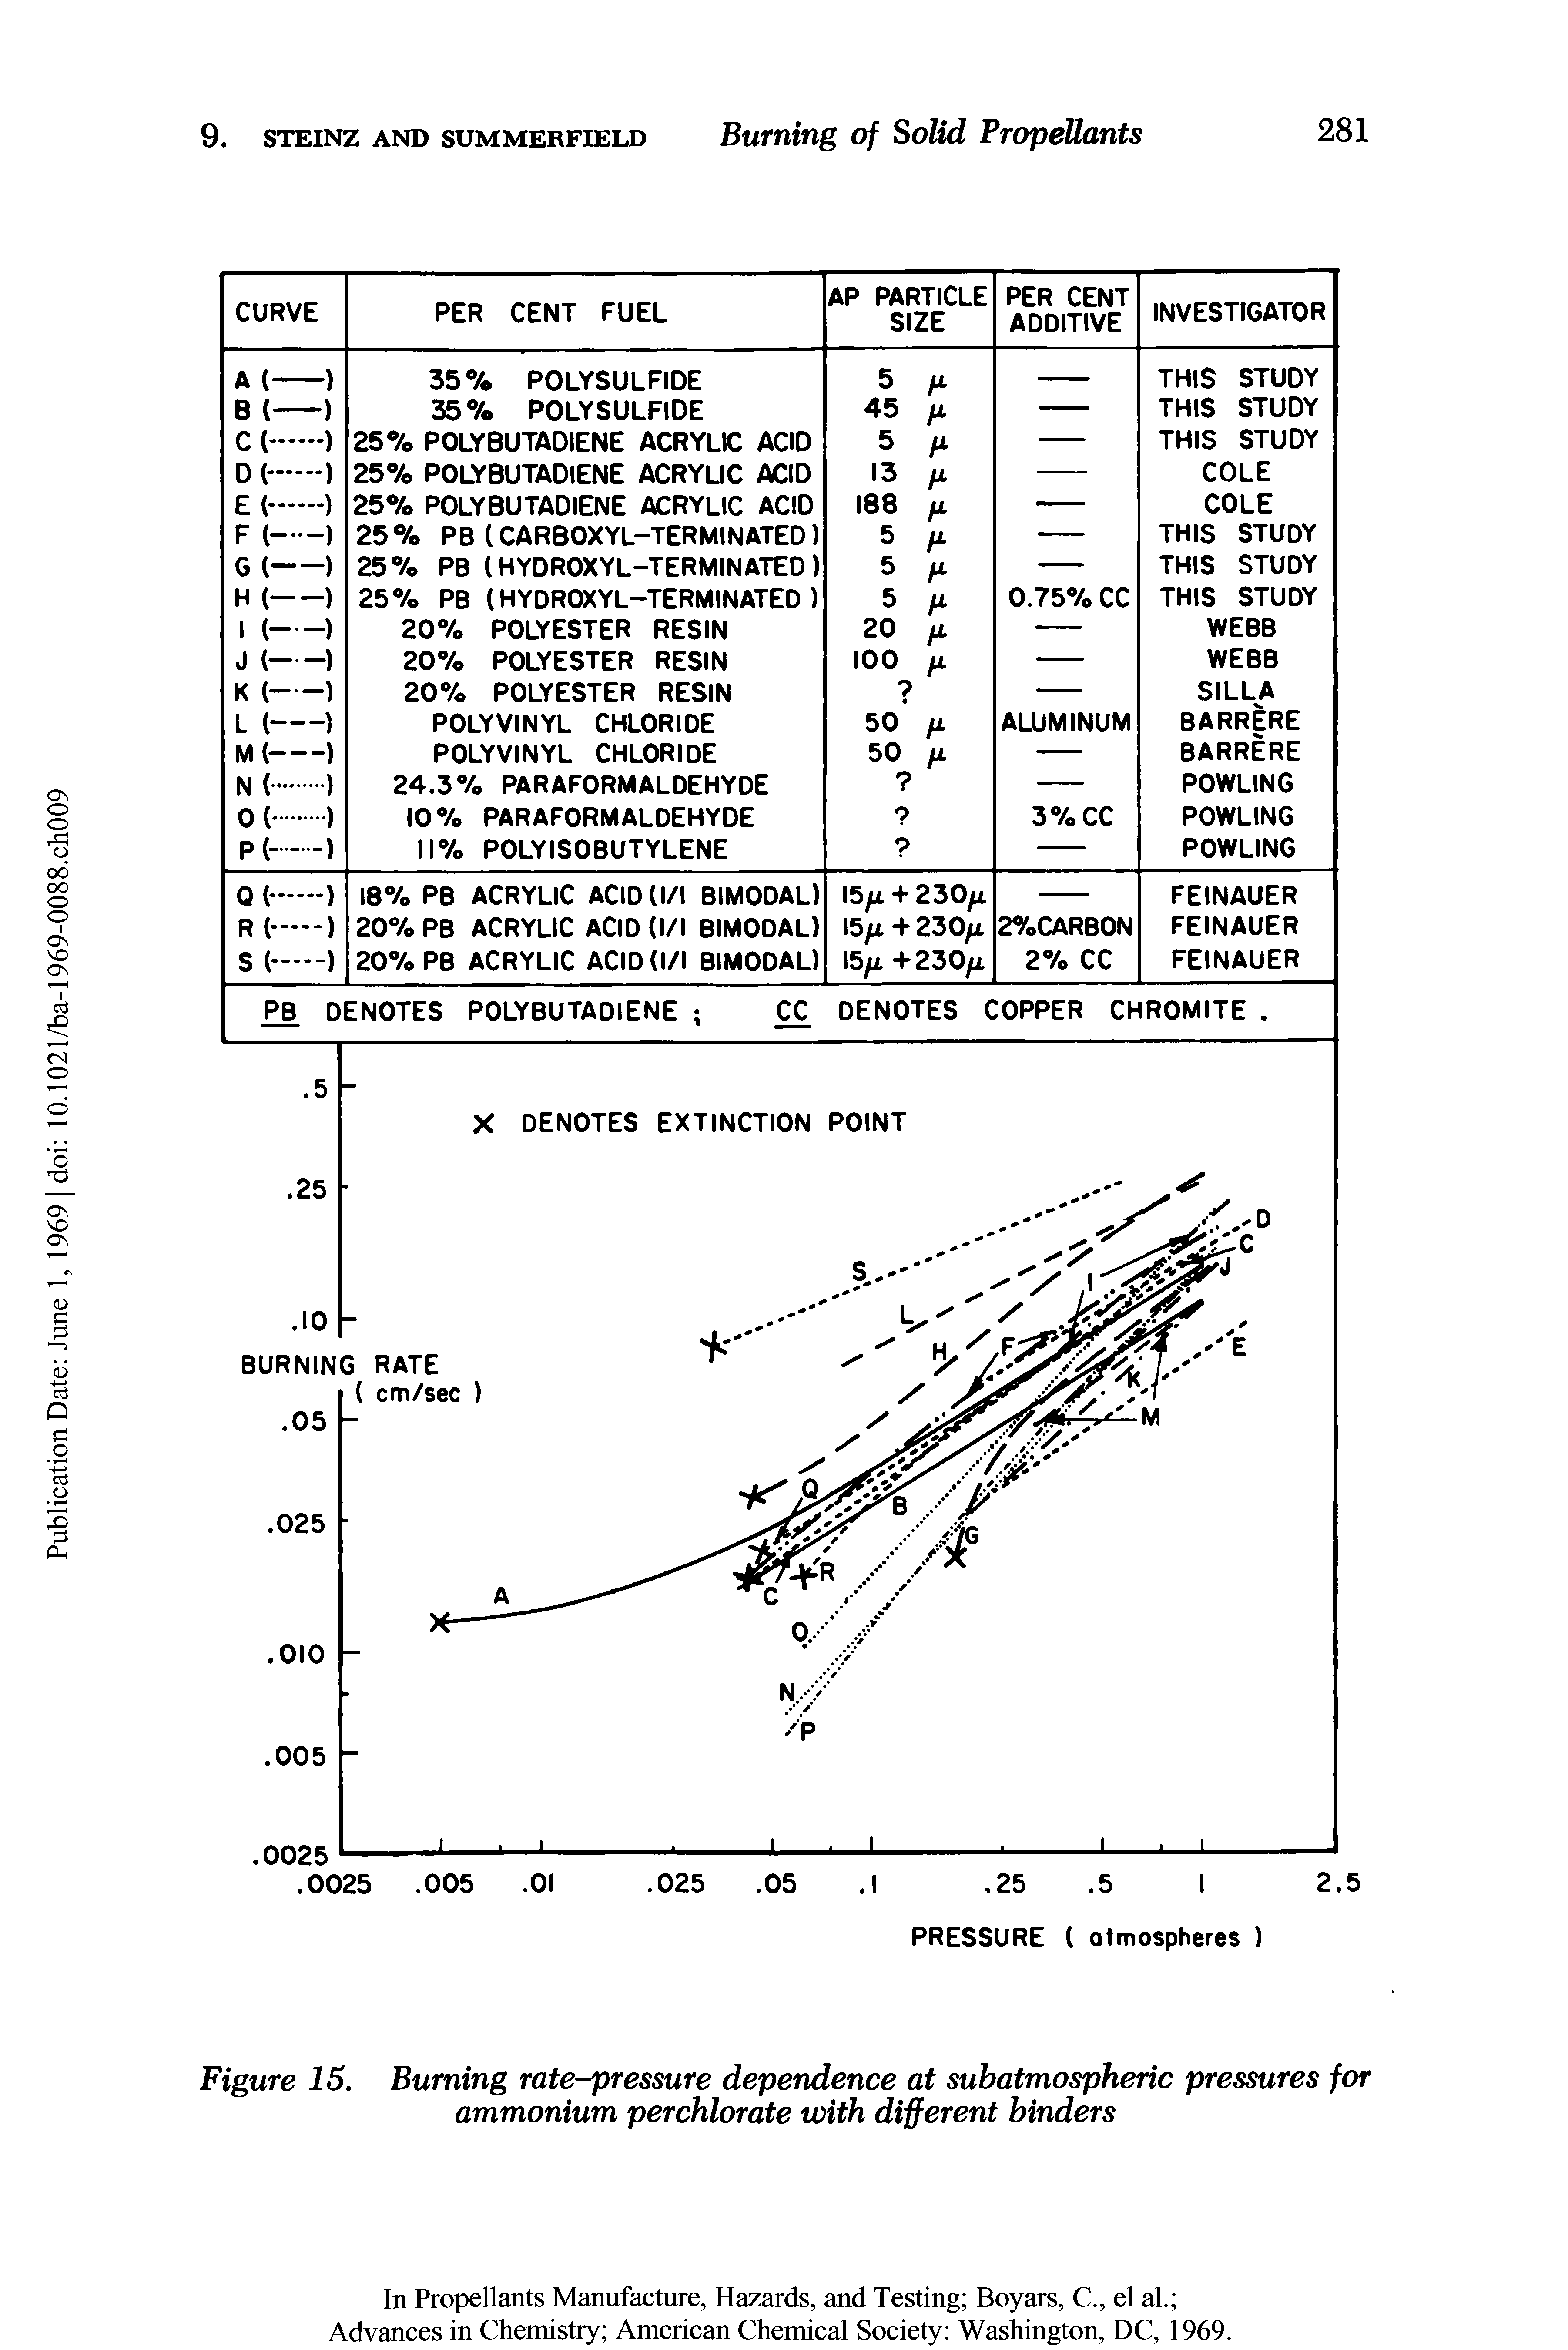 Figure 15. Burning rate-pressure dependence at subatmospheric pressures for ammonium perchlorate with different binders...